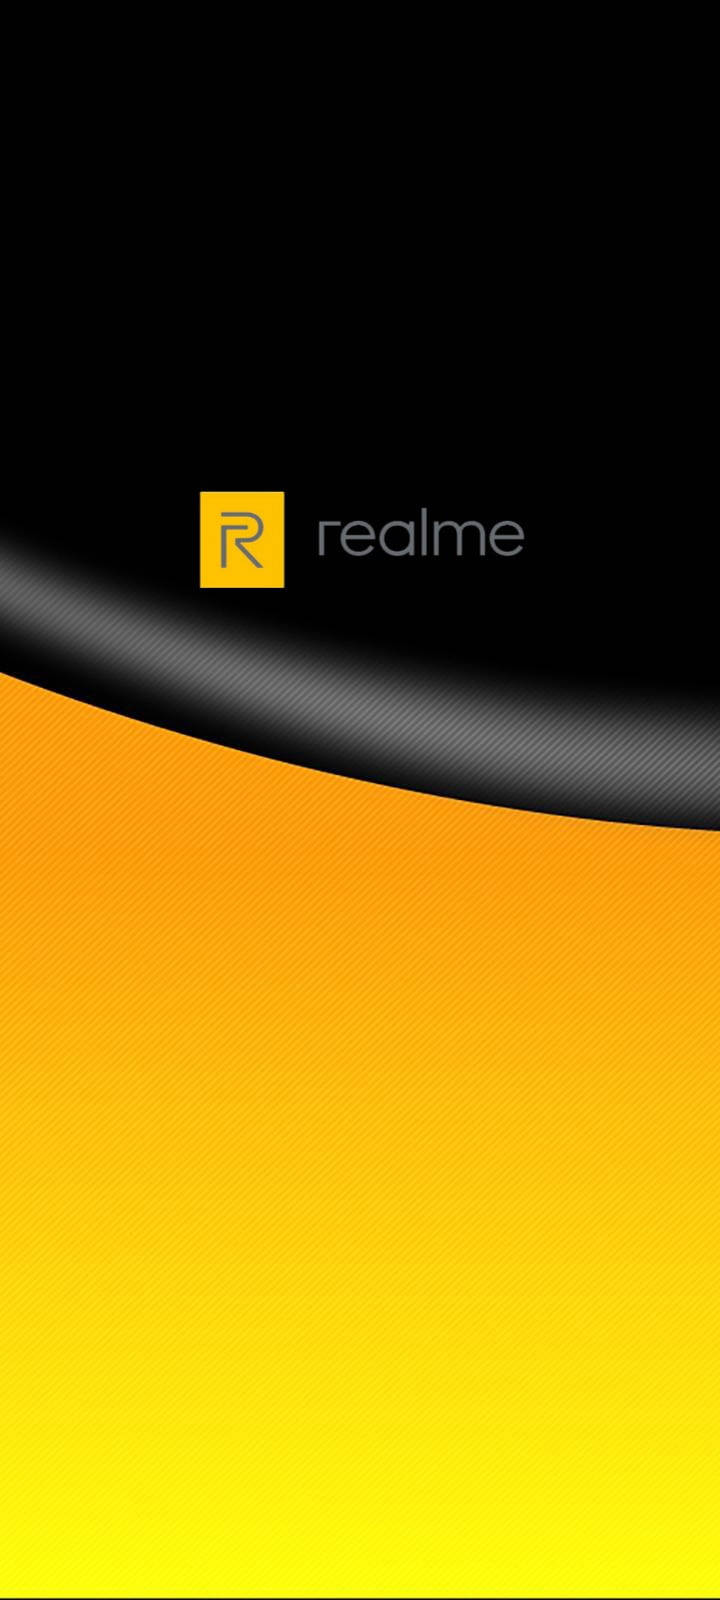 Realme Logo Black And Yellow Wallpaper